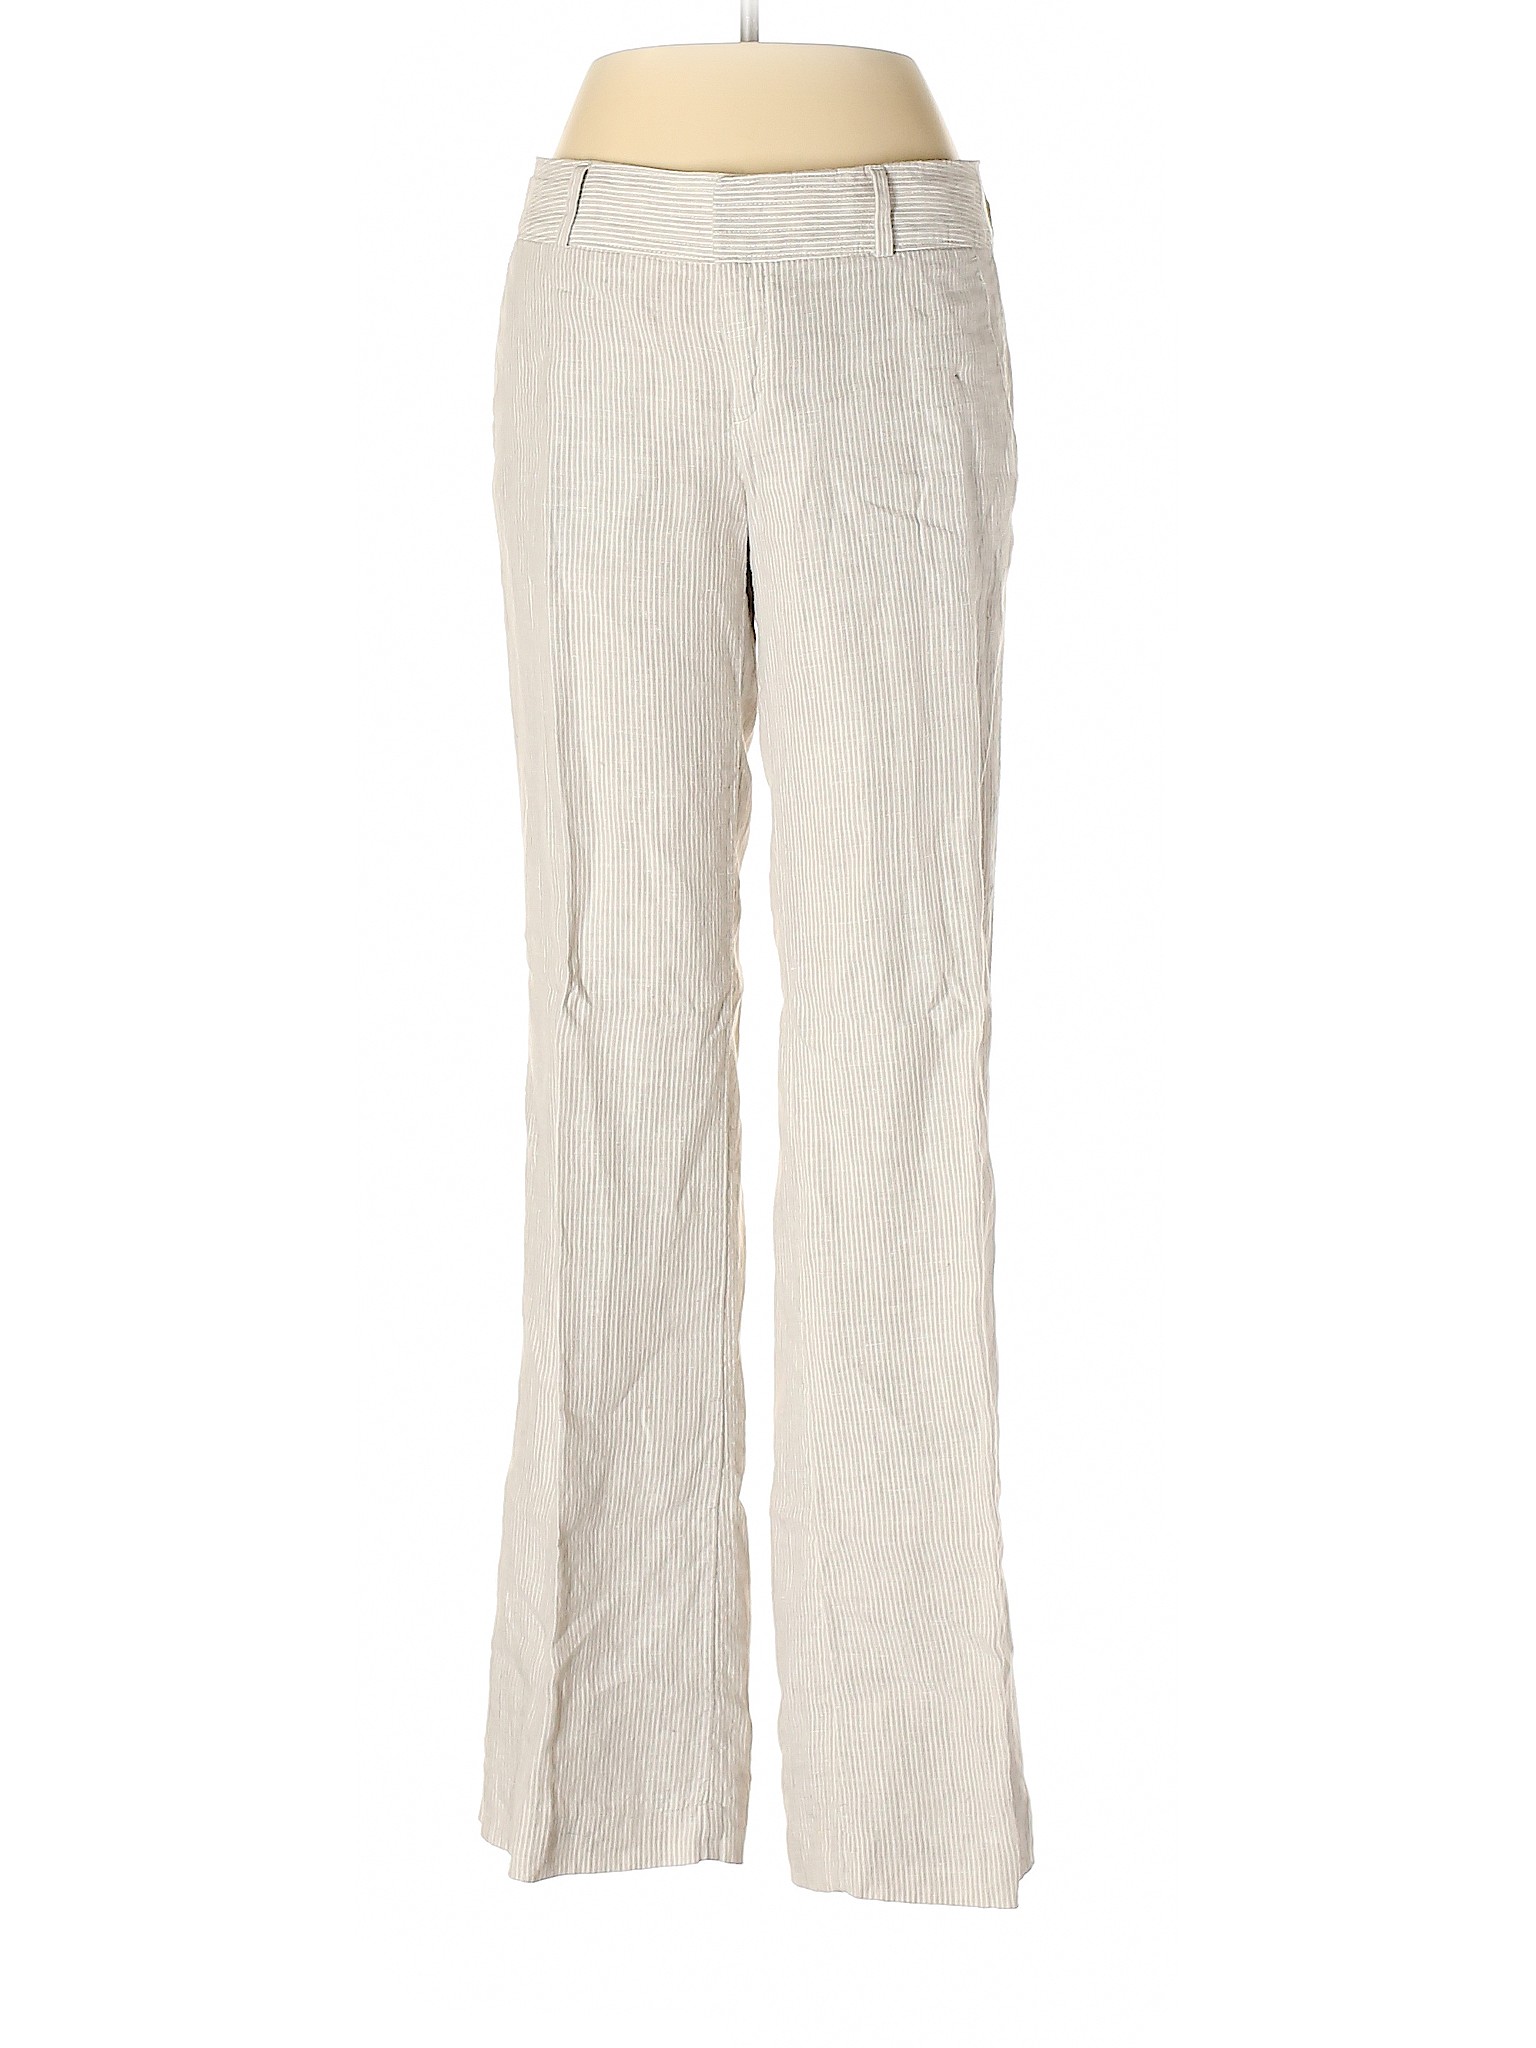 Banana Republic Women Gray Linen Pants 4 | eBay